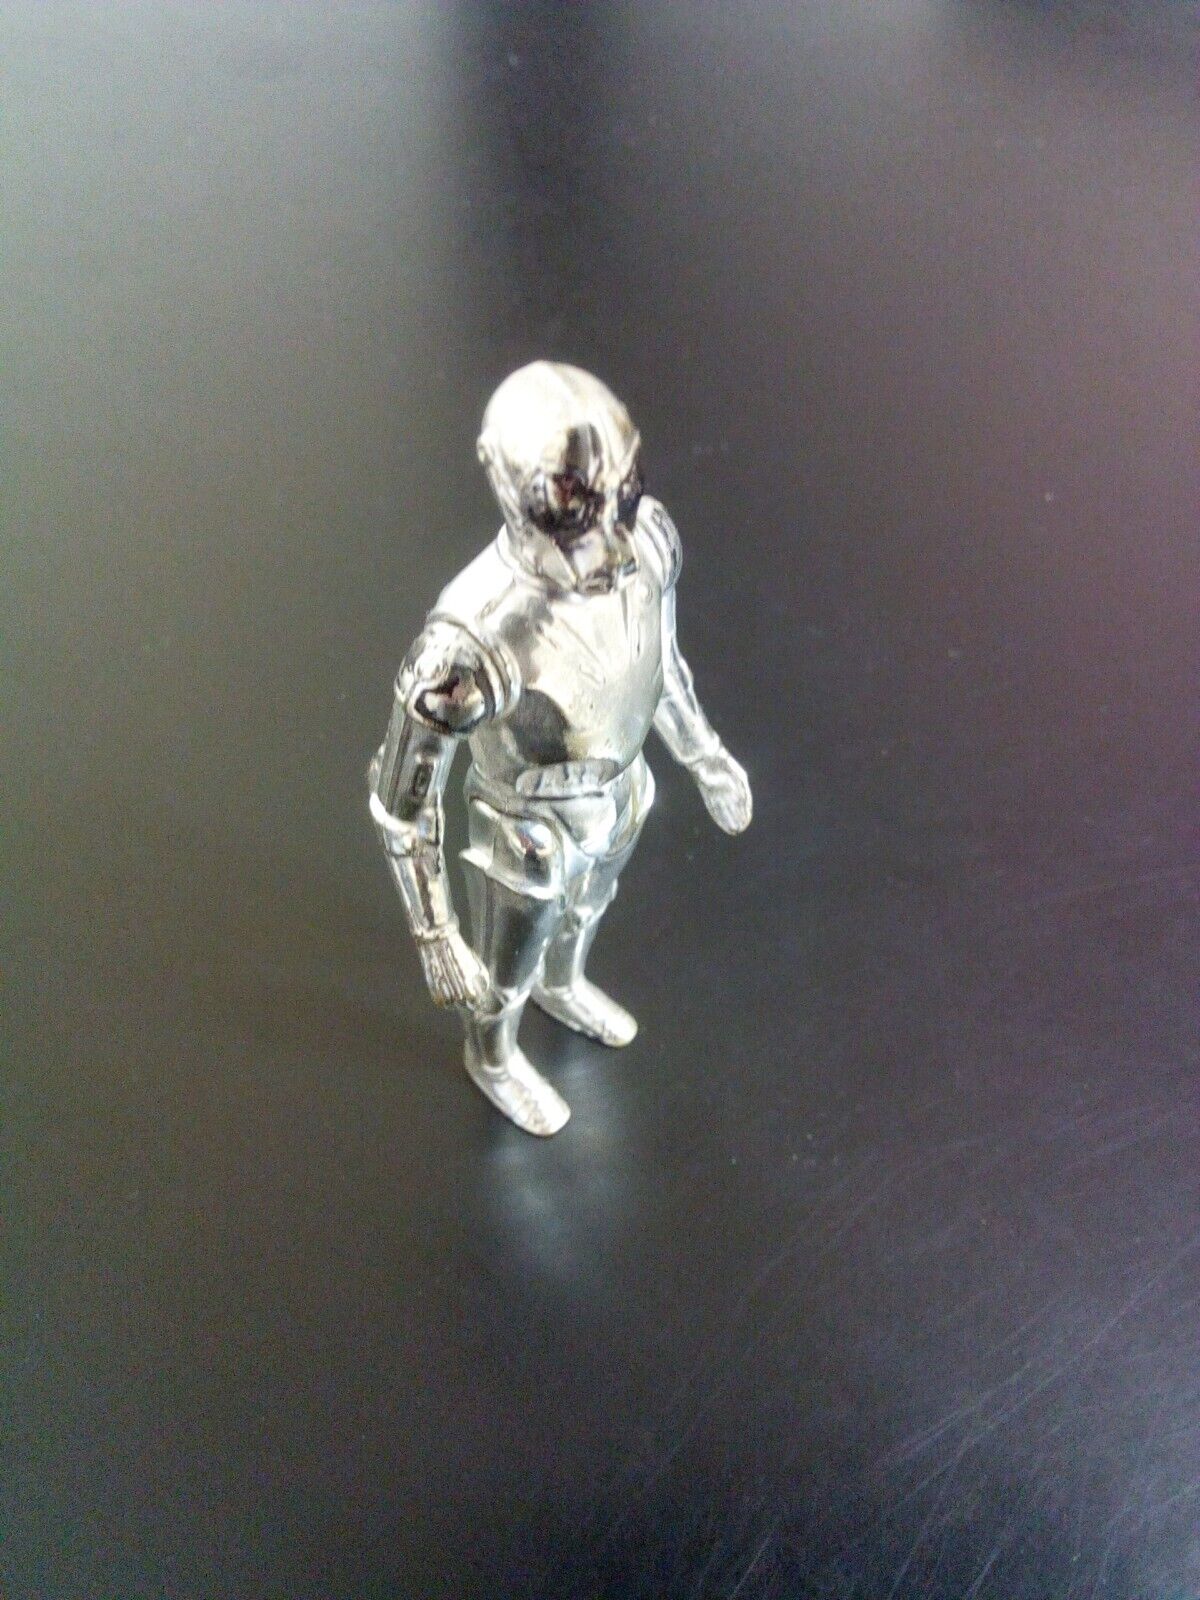 Original Death Star Droid 3.75" Action Figure 1979 Kenner Vintage Star Wars